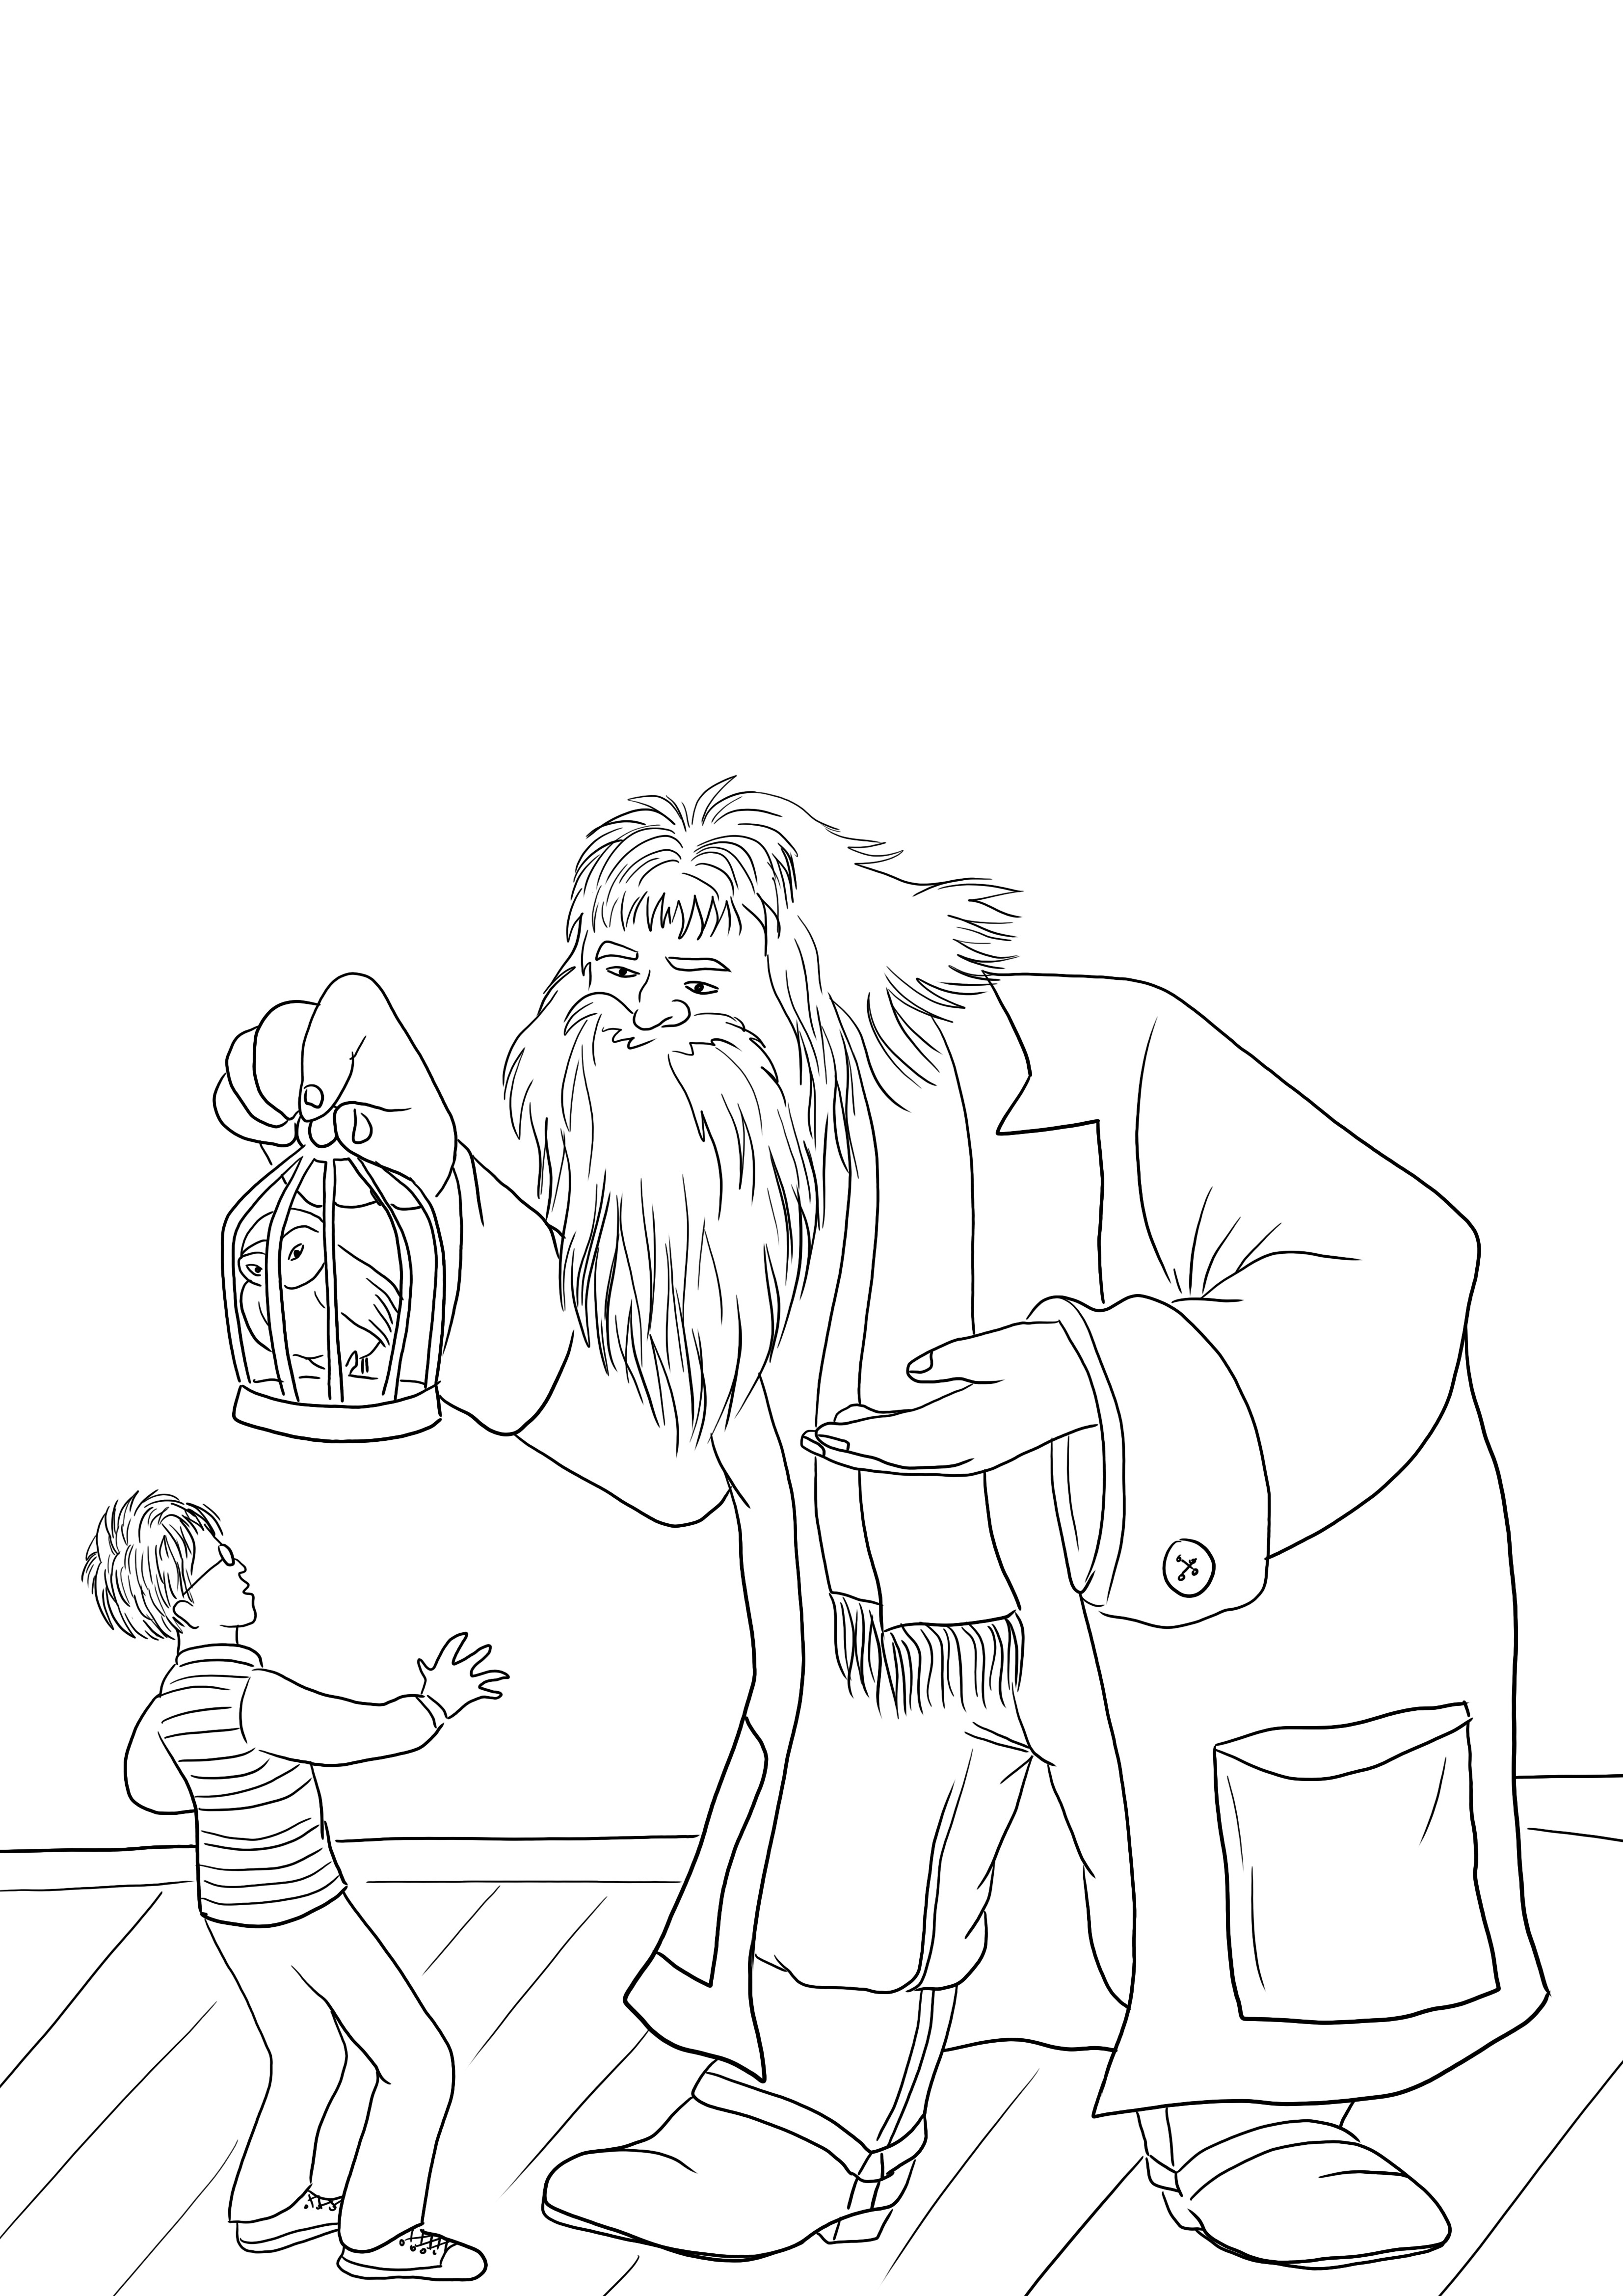 Hagrid oferece papagaio para Harry Potter para colorir imagem grátis para download